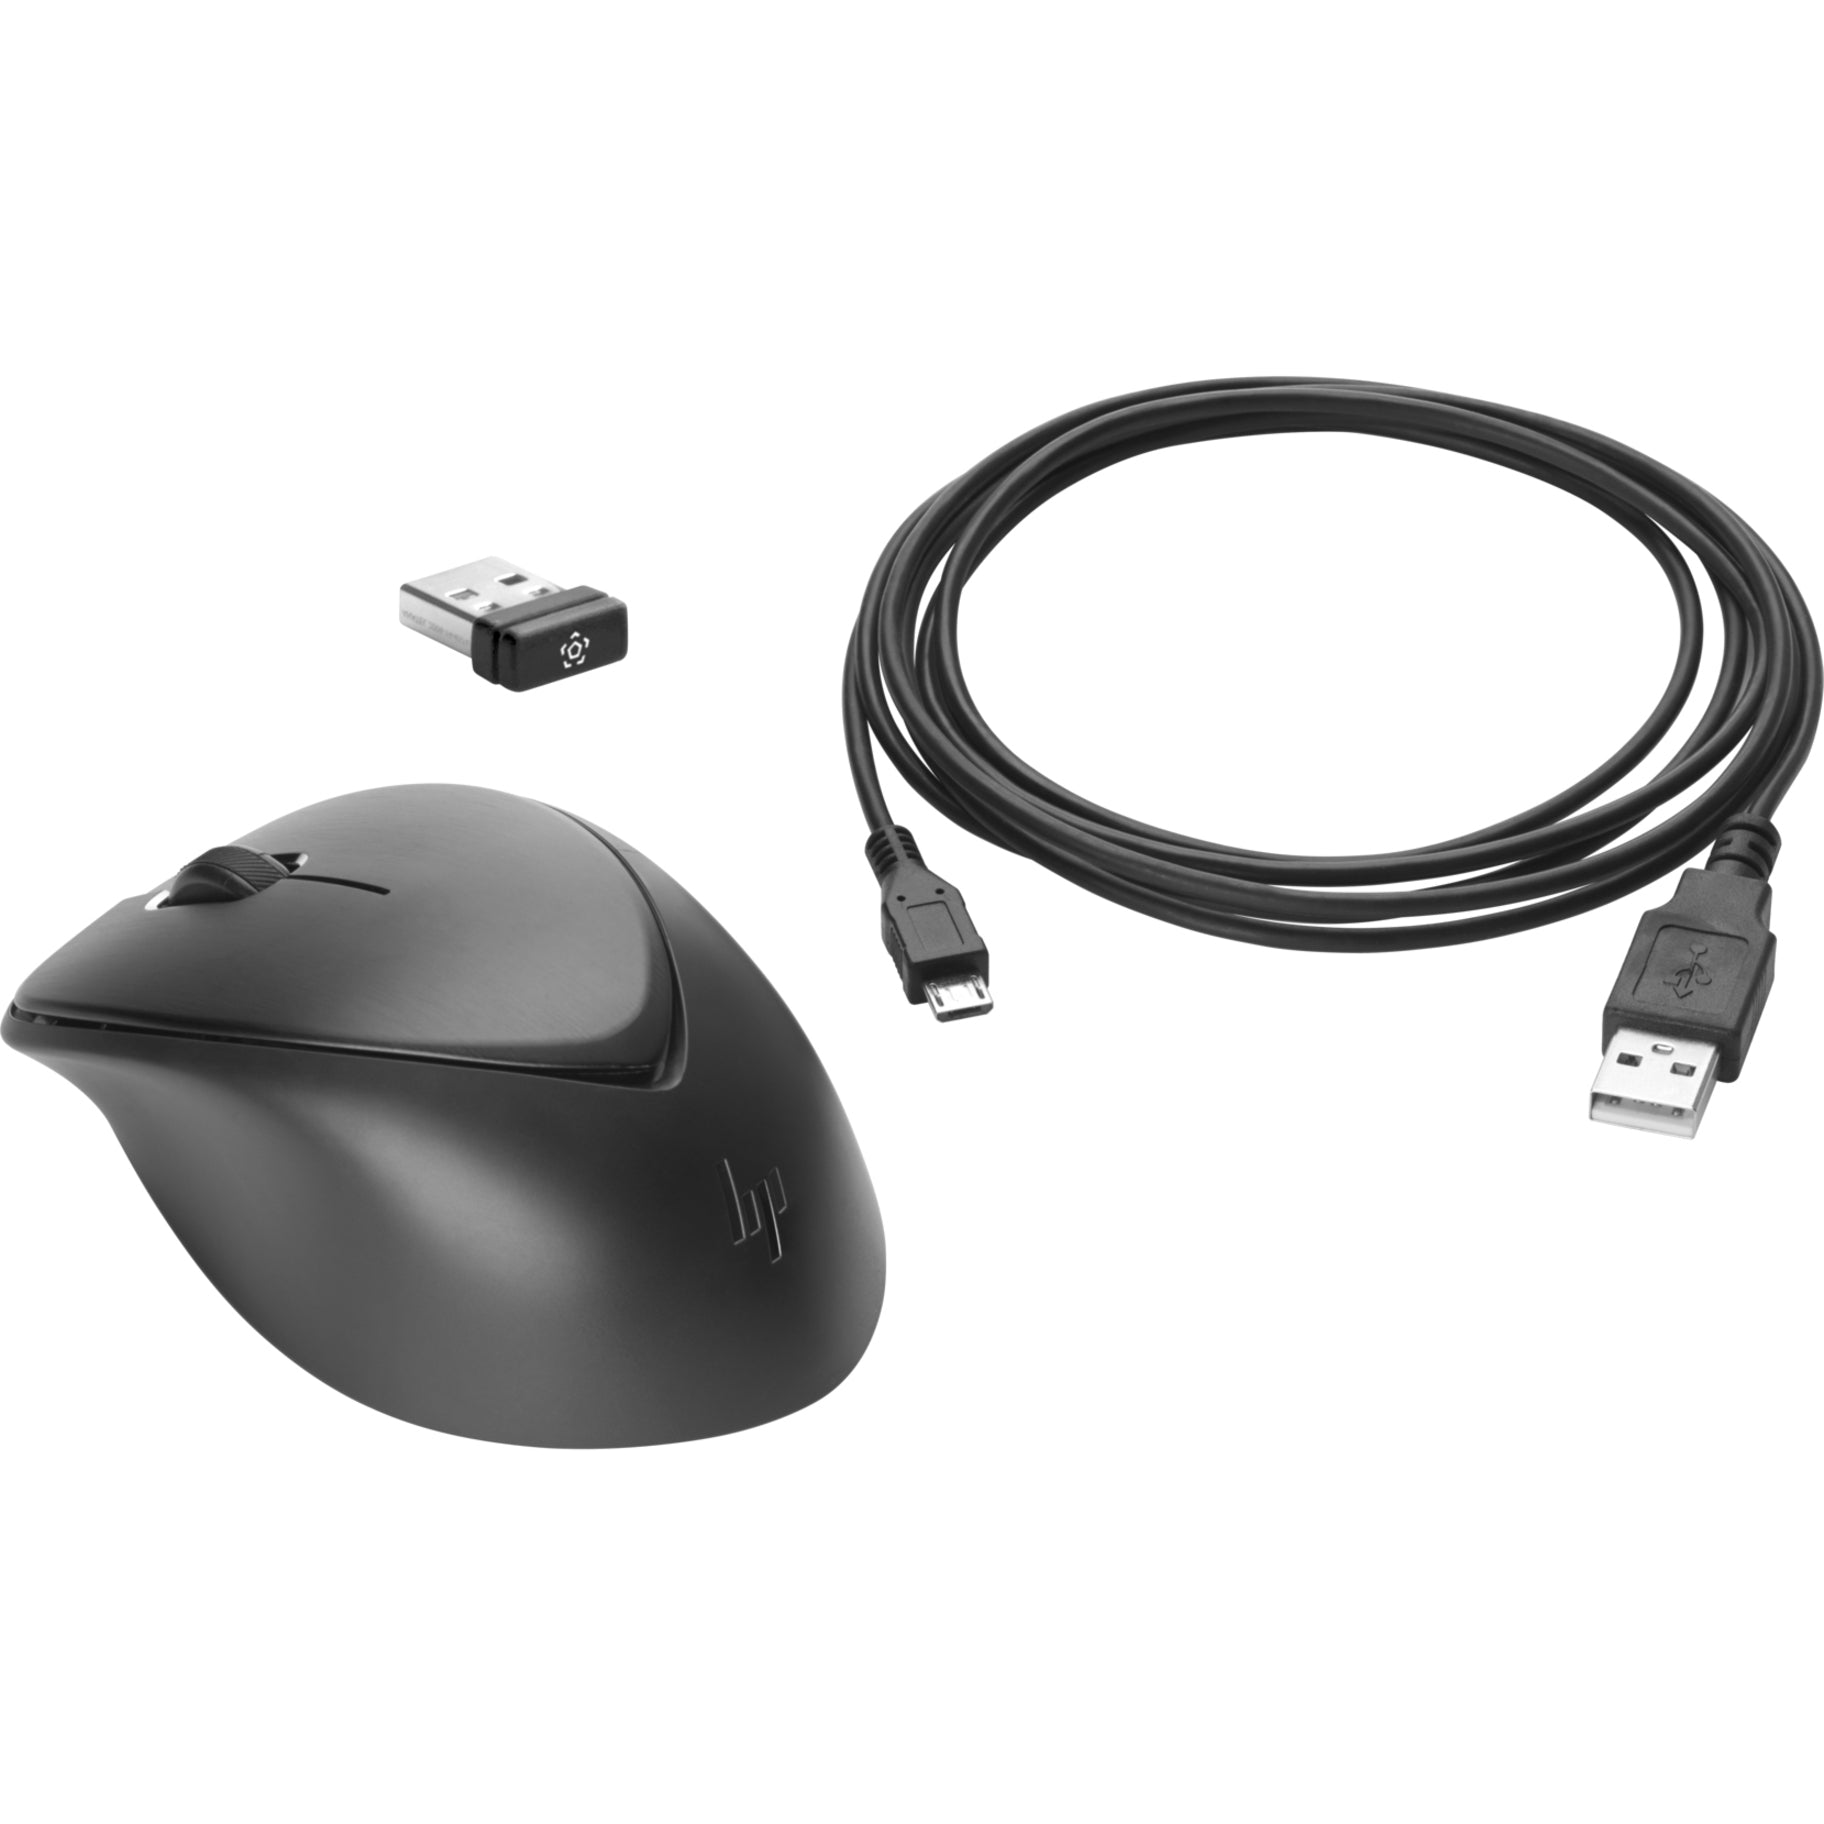 HP Wireless Premium Mouse U.S. - English Localization, Ergonomic Fit, Laser, 1600 dpi, Radio Frequency